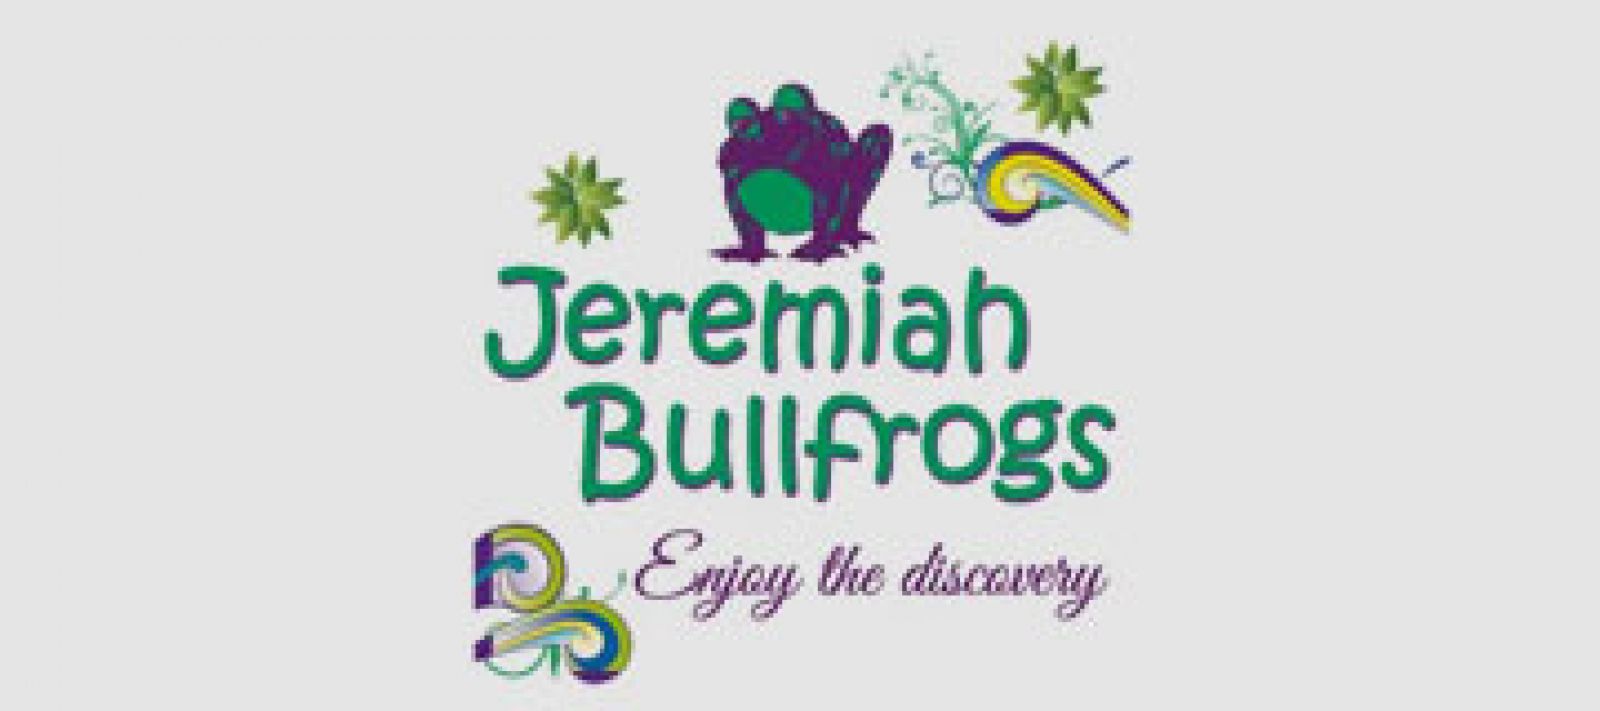 Jeremiah Bullfrogs banner image